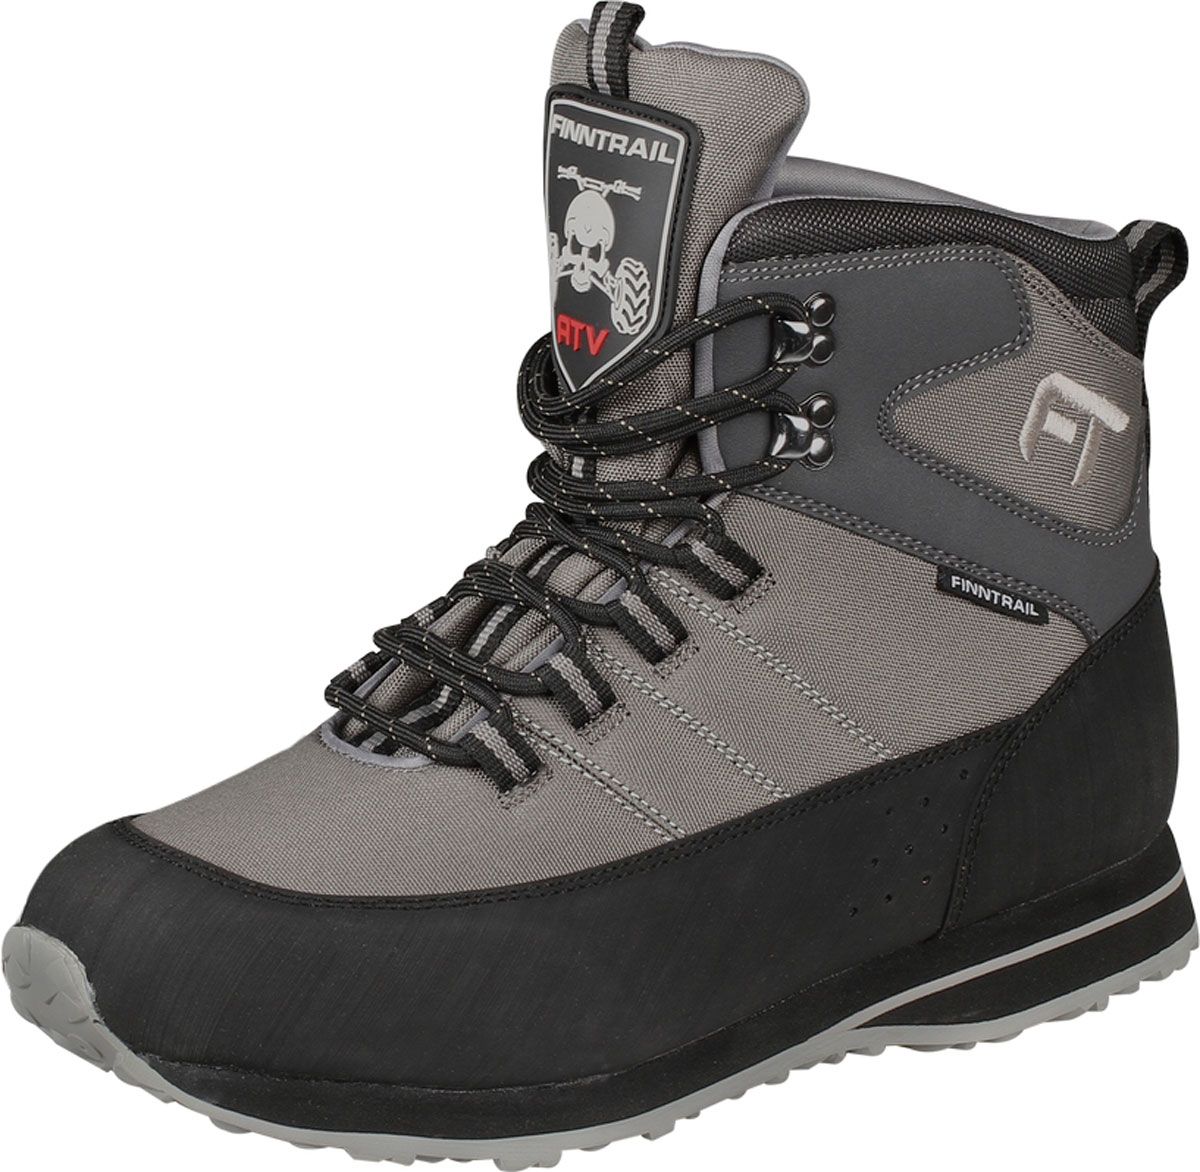 Ботинки для рыбалки Finntrail New Stalker, цвет: серый, черный. 5192. Размер 43